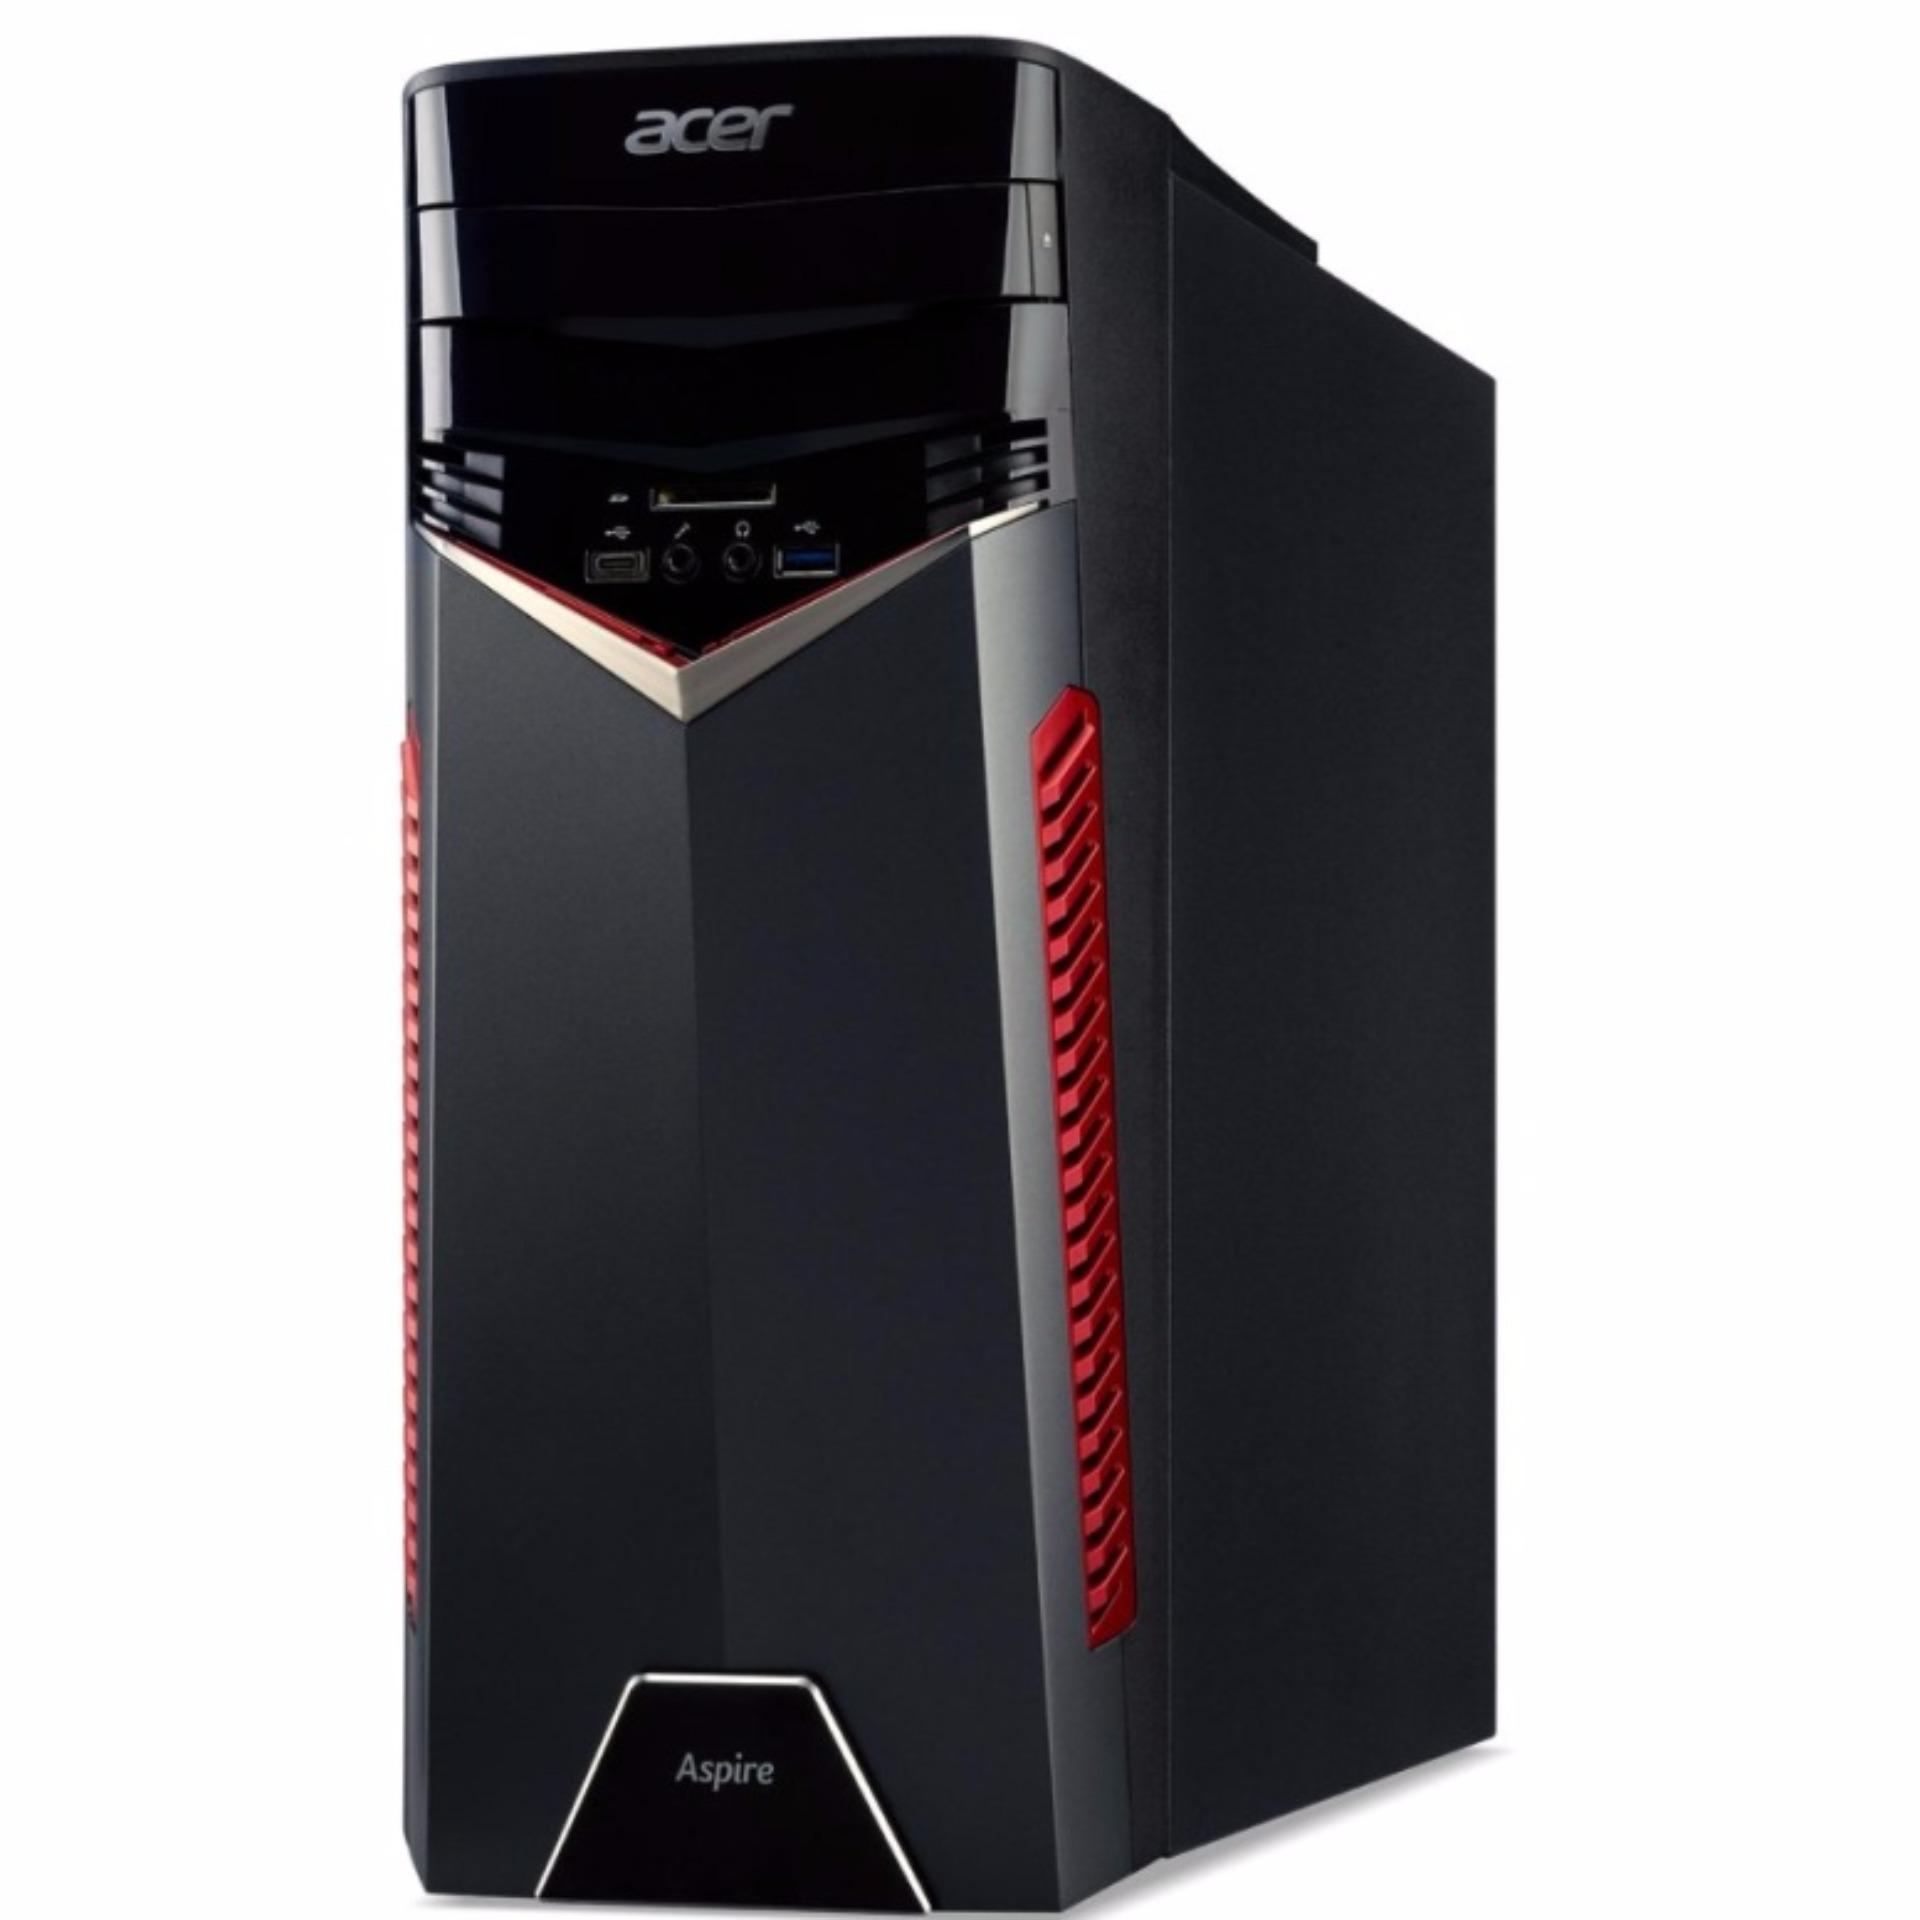 Acer Aspire GX-785 (i77MR161T06) I7-7700 16GB RAM Gaming Desktop (Black)